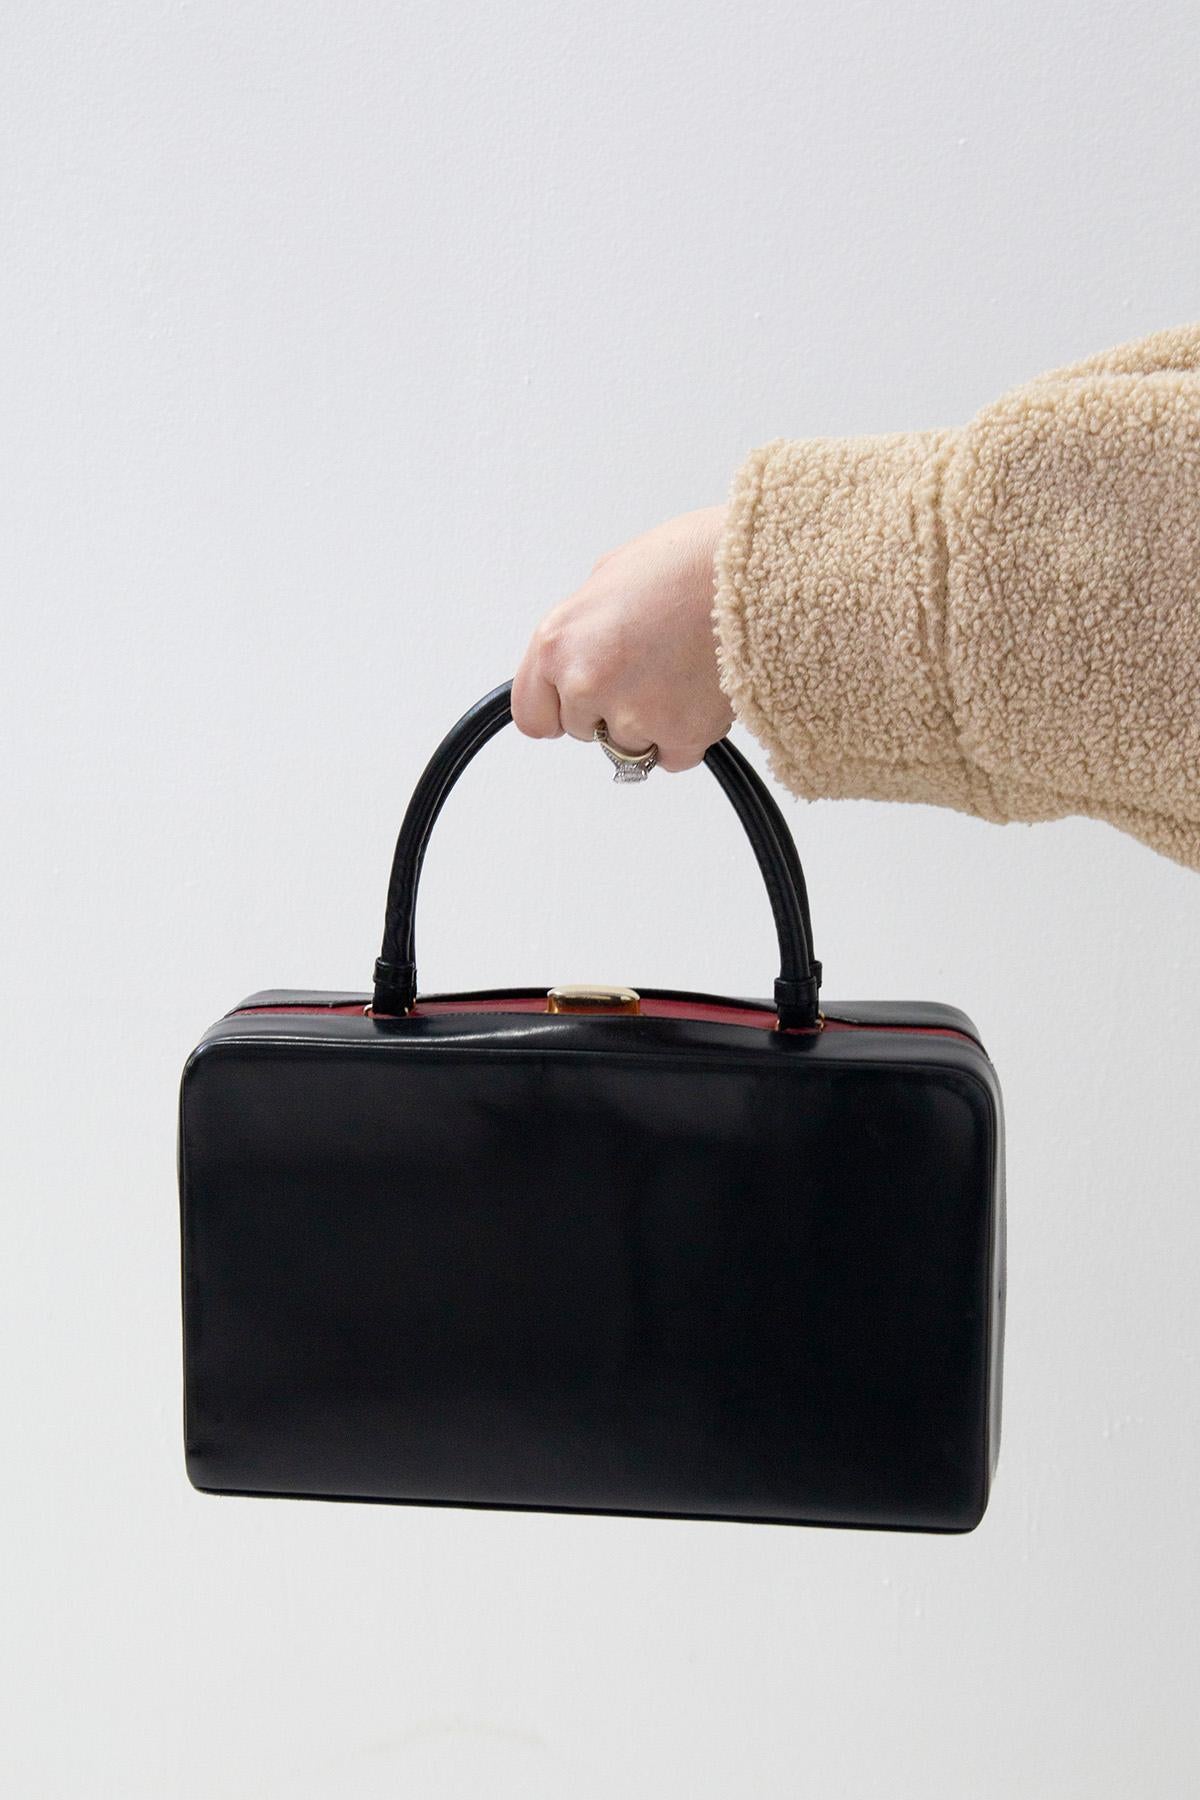 Gucci vintage red and black leather handbag For Sale 7